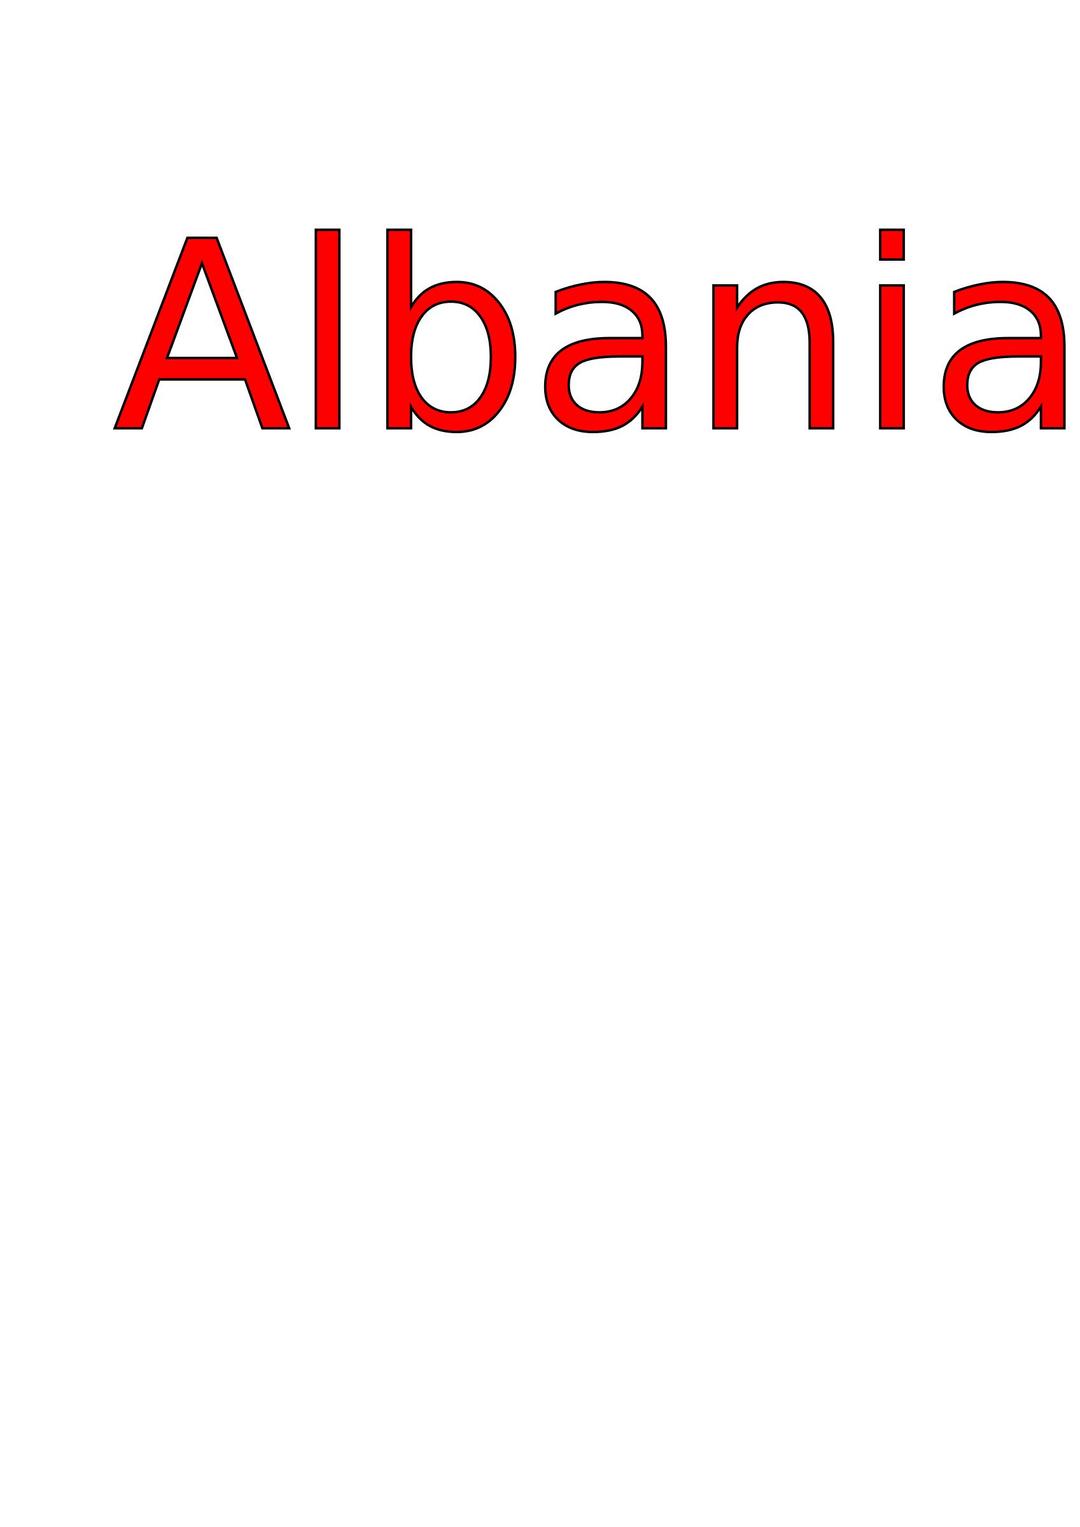 Albania png transparent